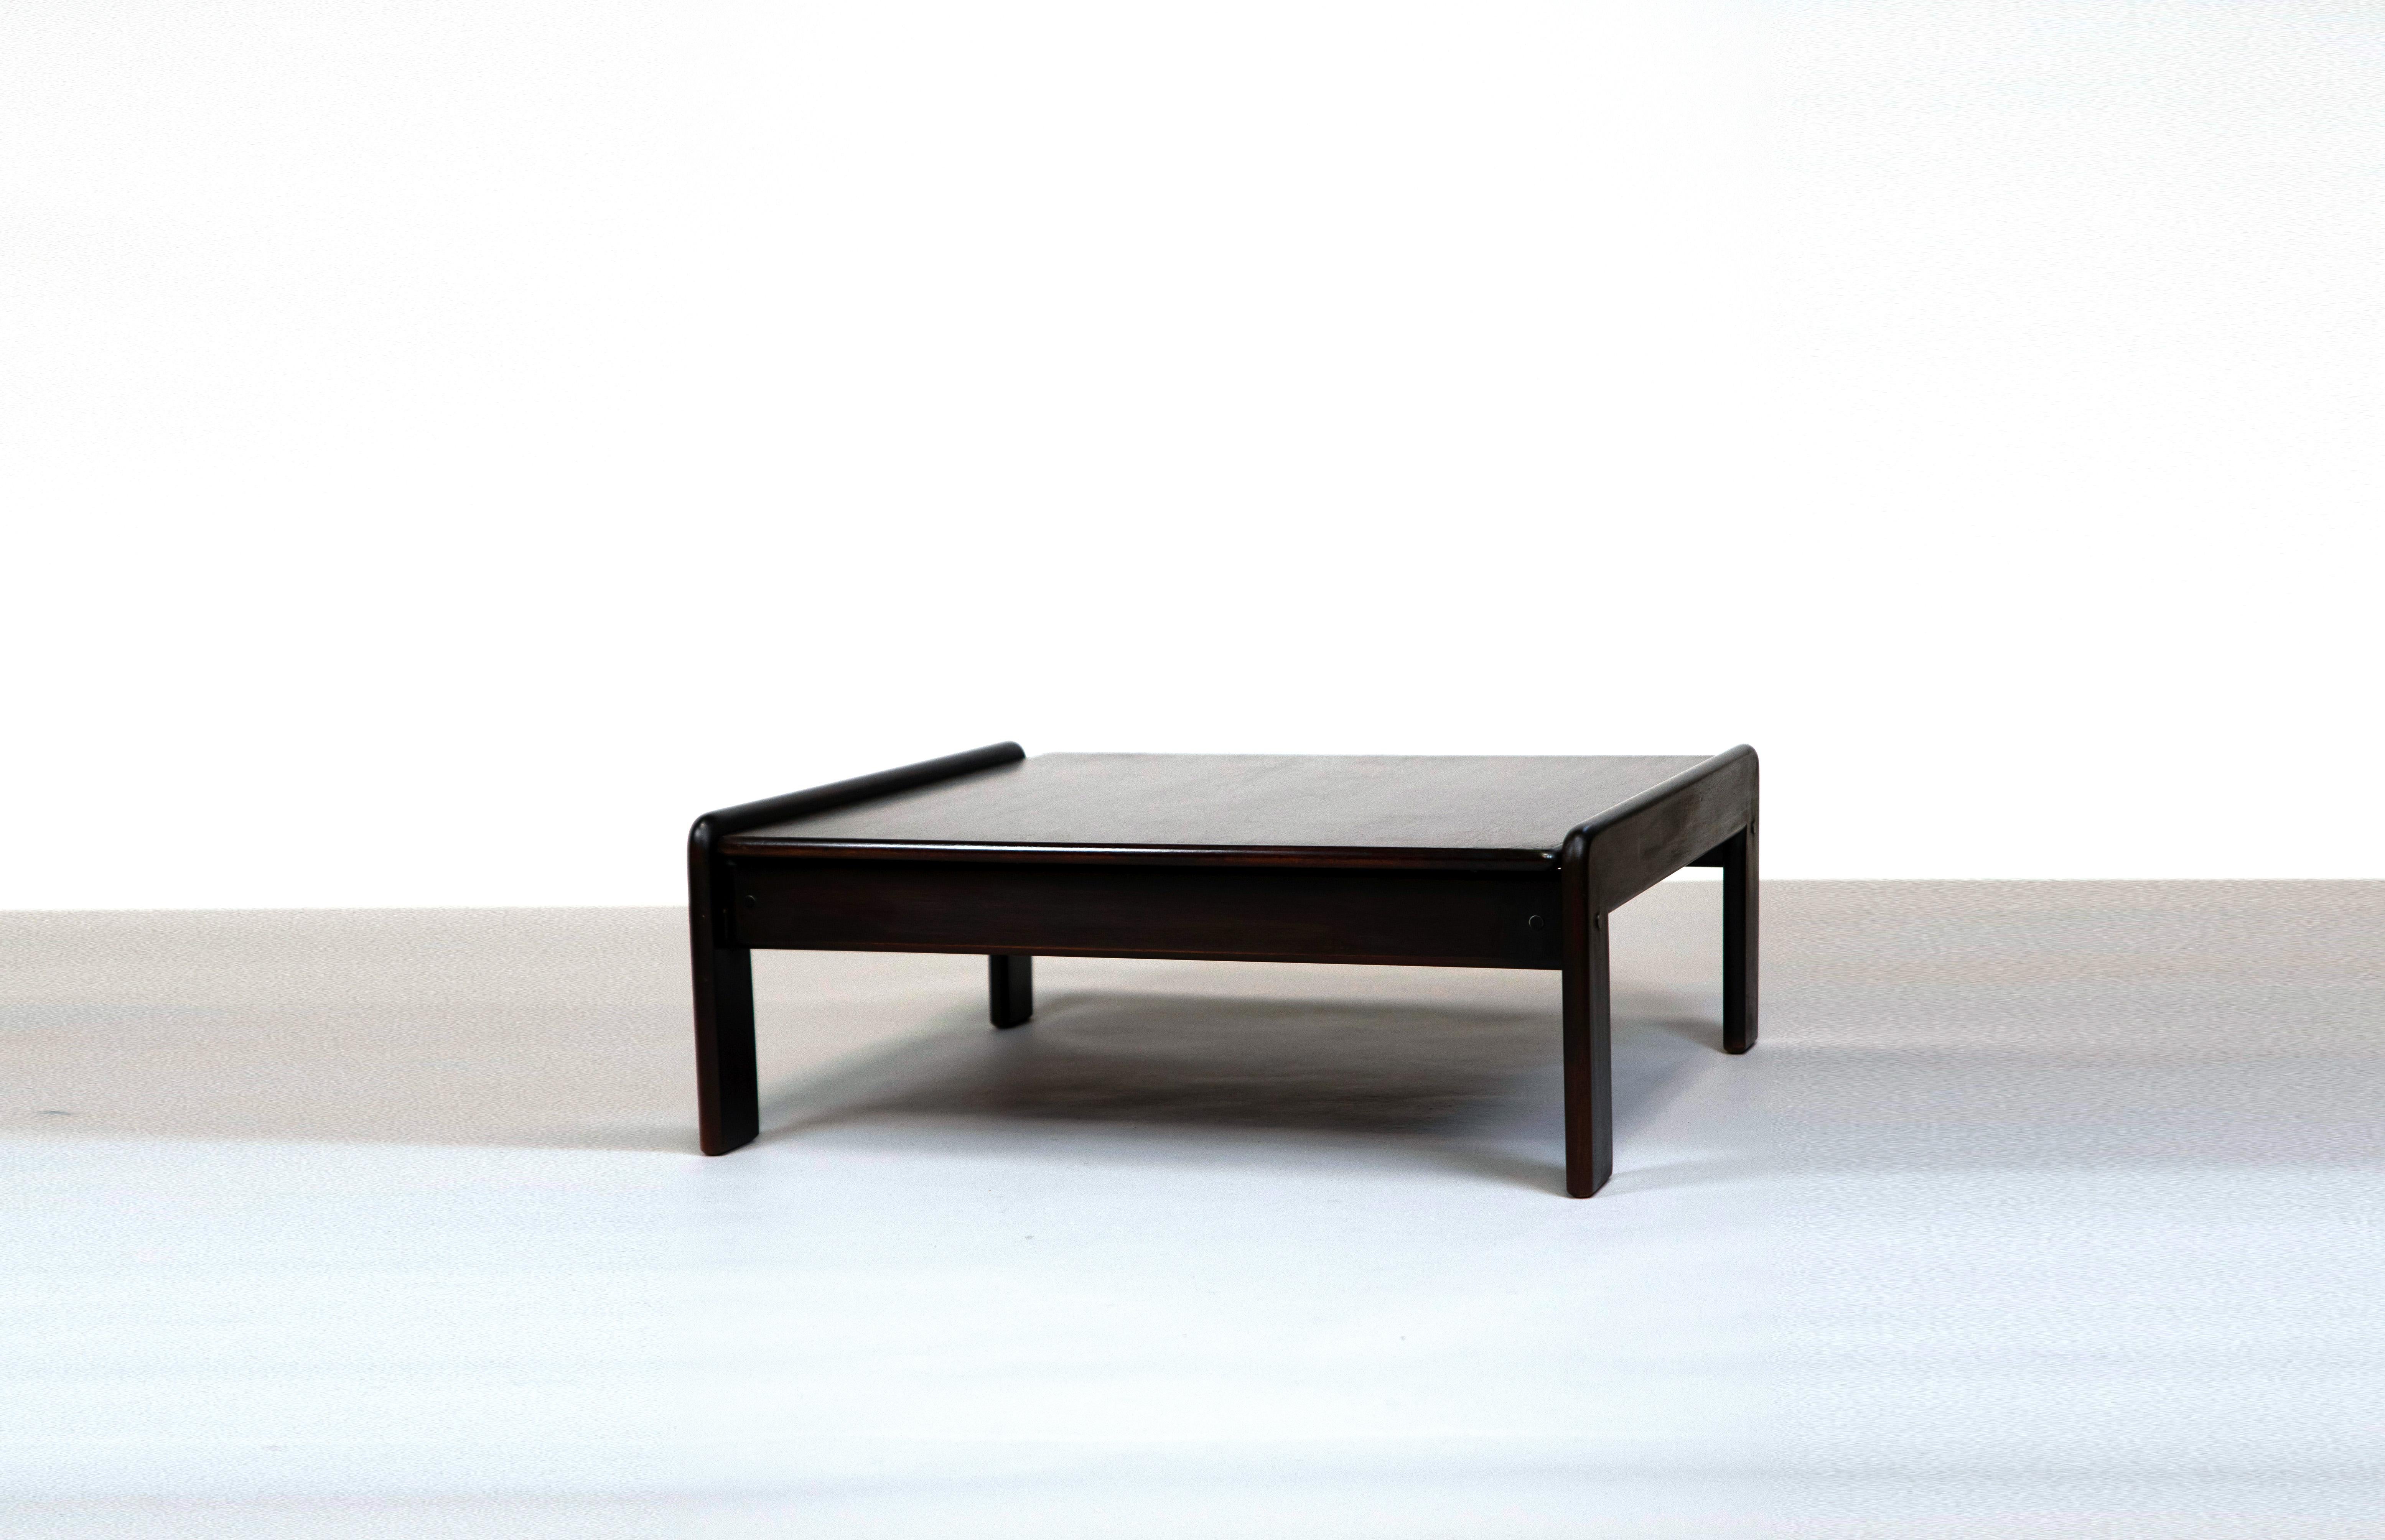 Geraldo de Barros, Table centrale, c. 1970
Bois et placage de bois, 31 x 79 x 85 cm.

Cette table en bois et placage de Geraldo de Barros pour 